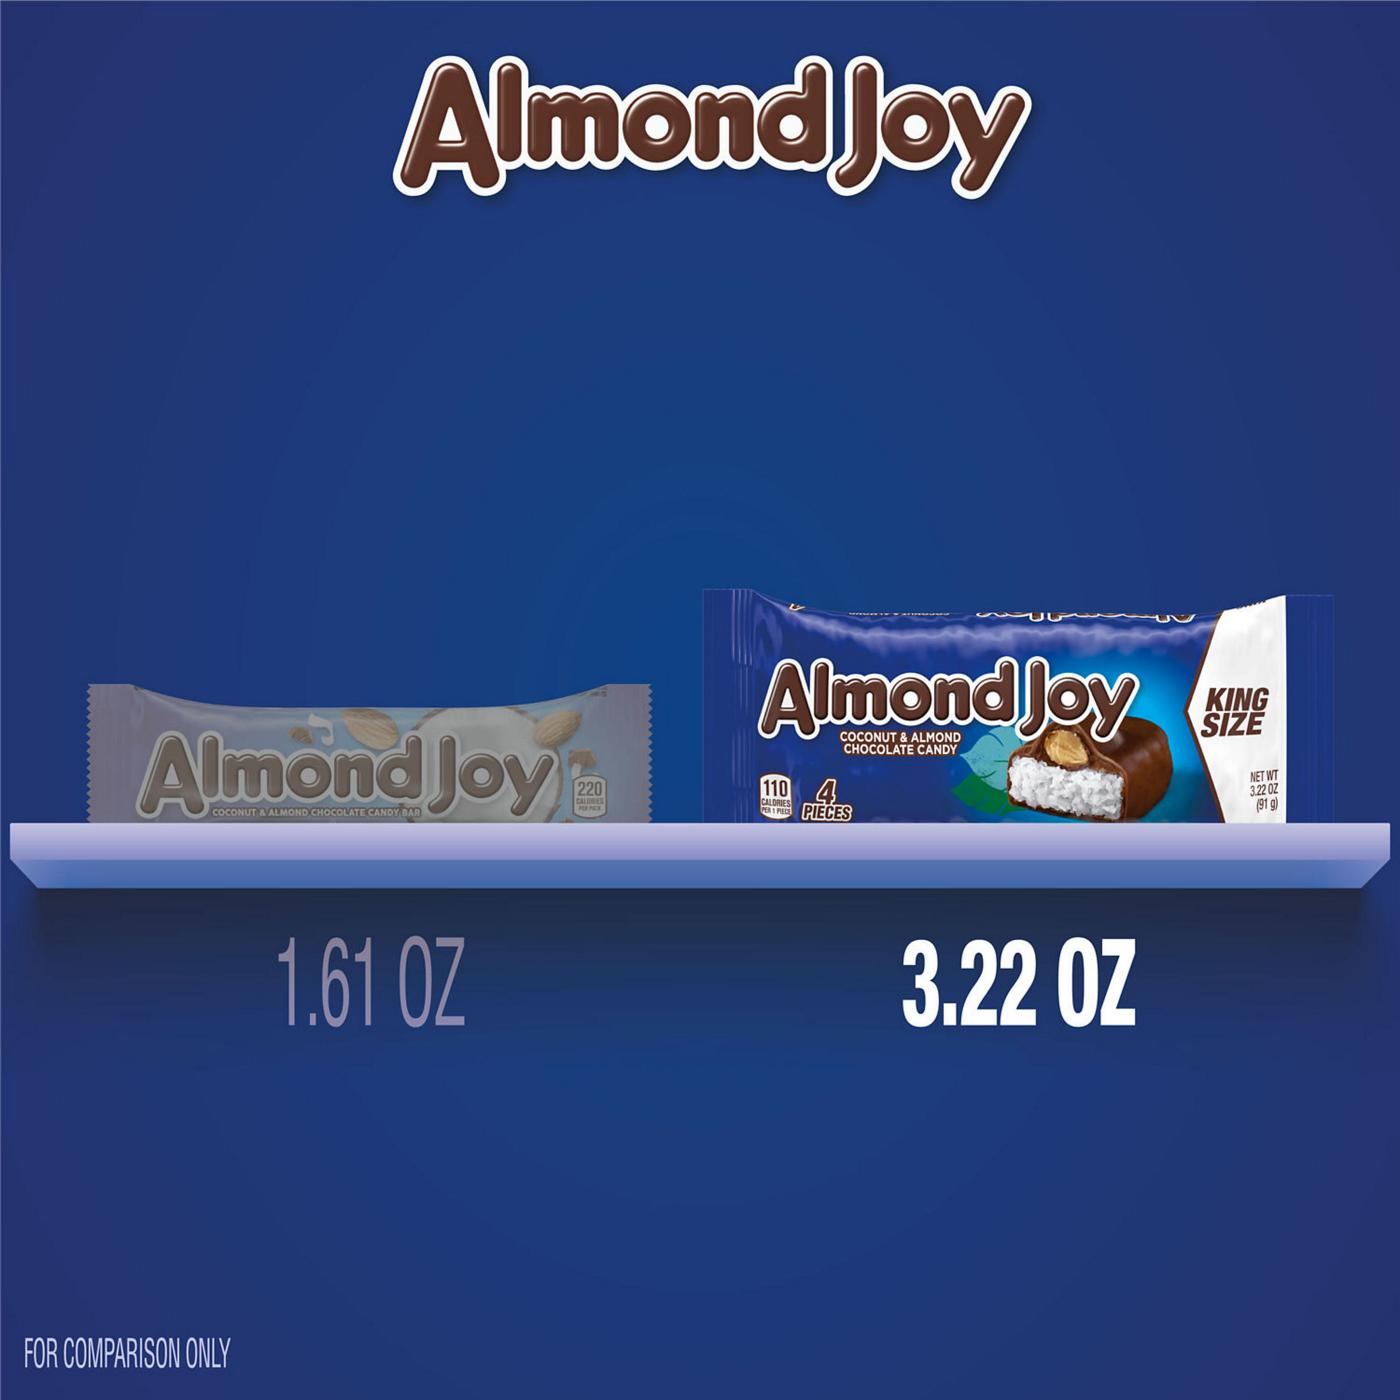 Almond Joy Coconut & Almond Candy Bar - King Size; image 2 of 2